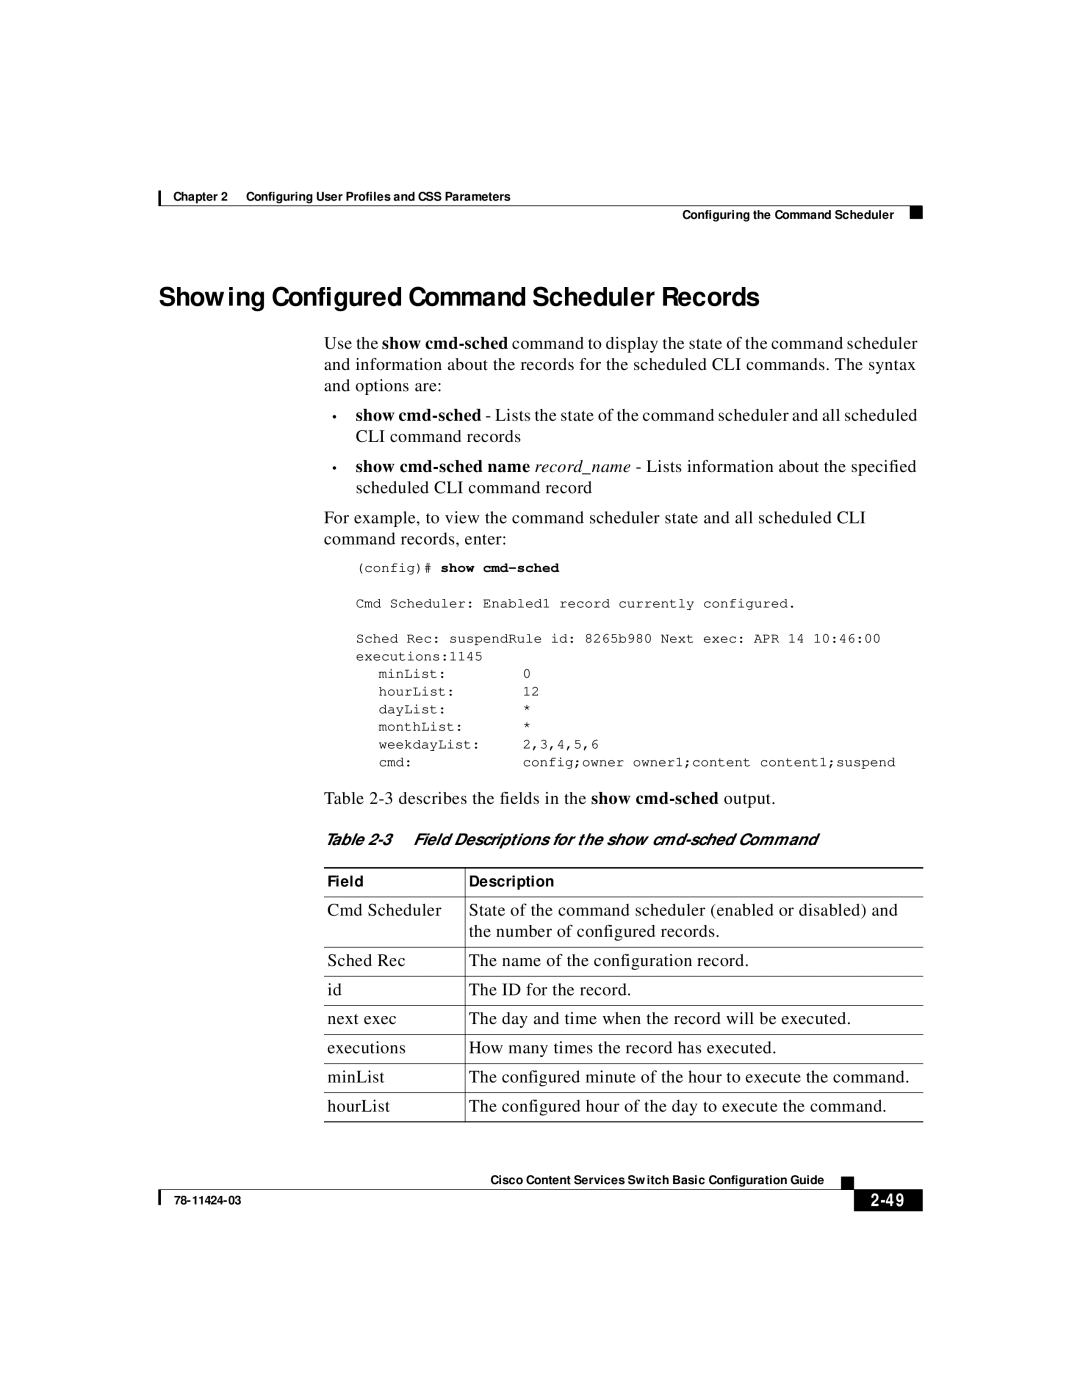 Cisco Systems 78-11424-03 manual Showing Configured Command Scheduler Records, 2-49, Field, Description 